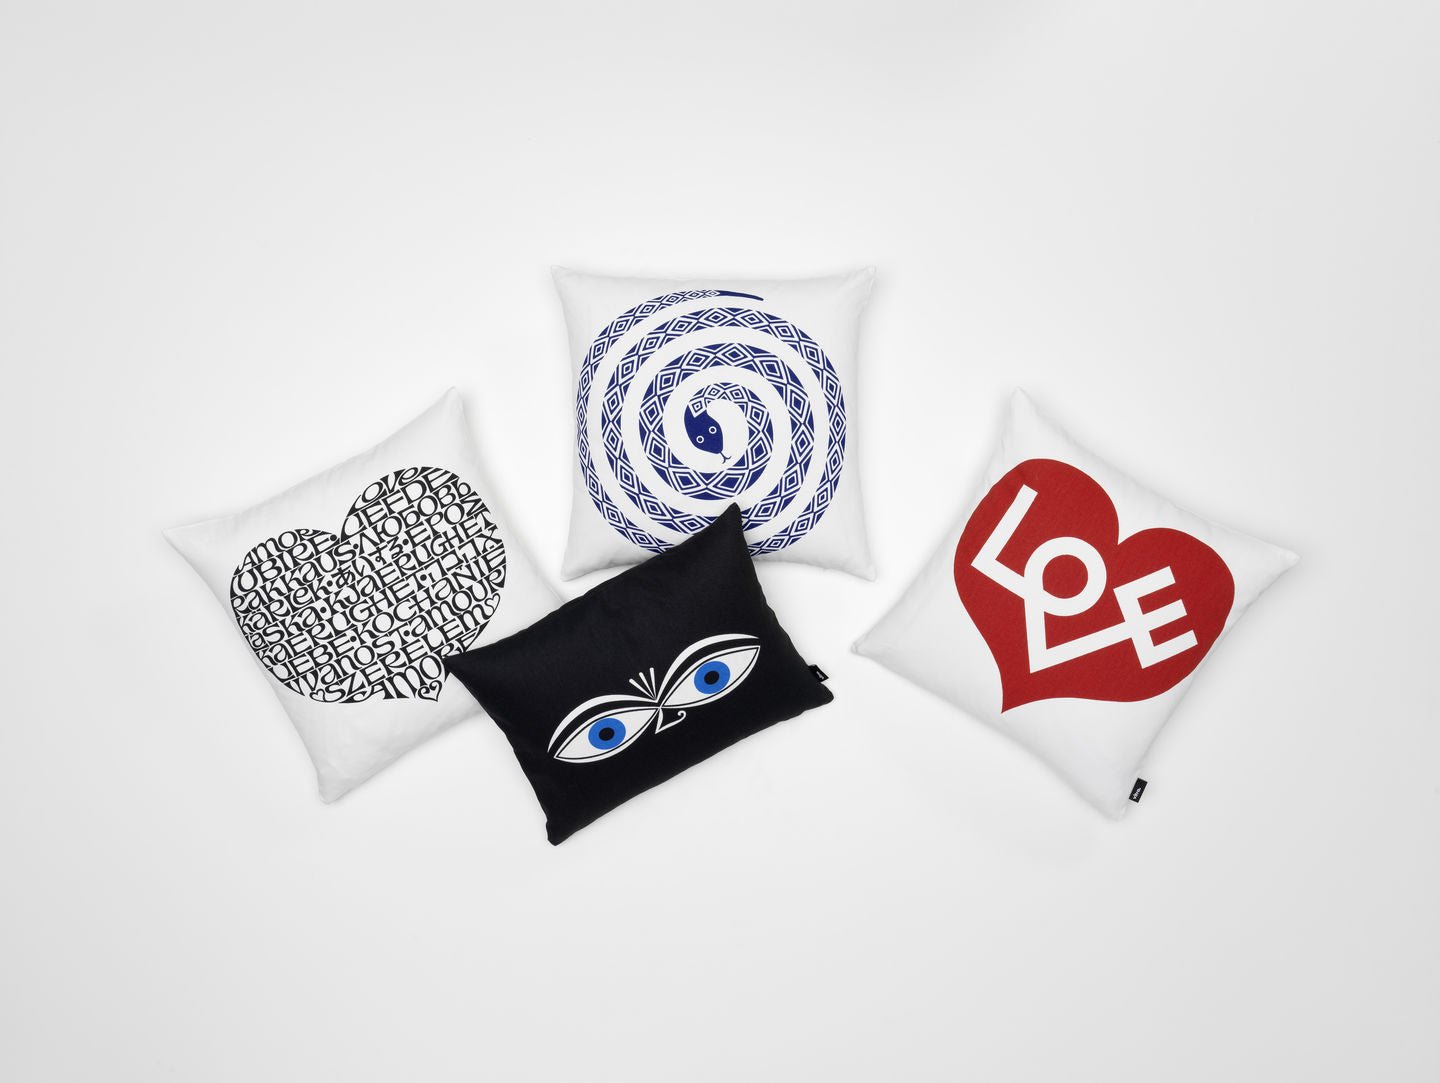 Graphic Print Pillows, Snake ultramarine - Vitra Design Museum Shop